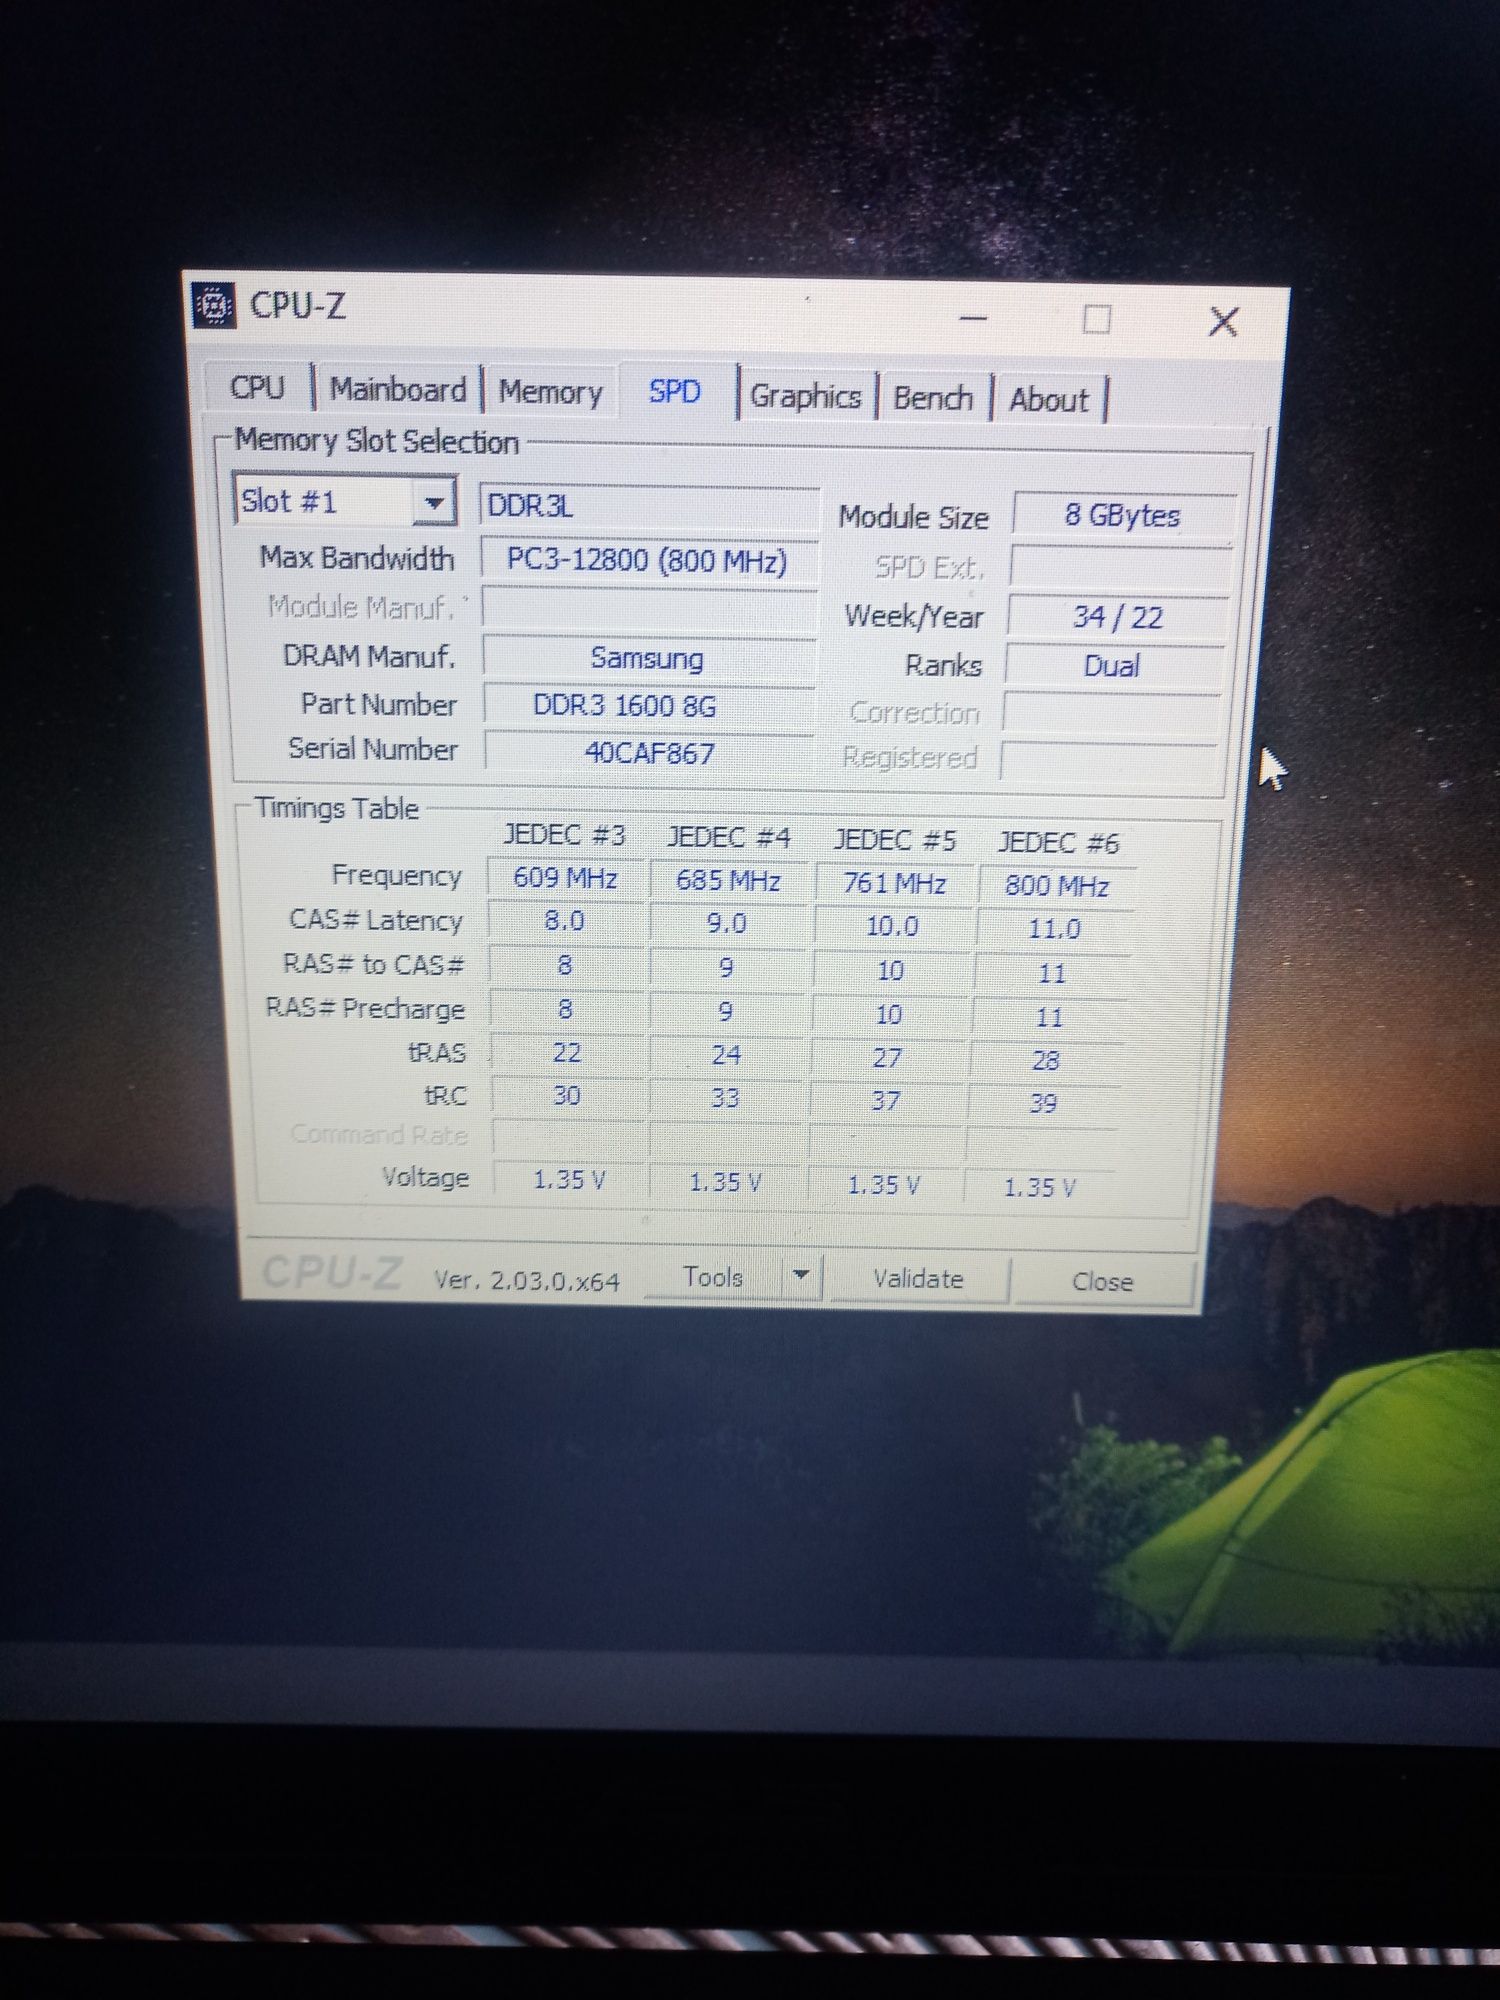 4 Gb DDR3 для ноутбуків SODIMM "Walram" 1600 Mhz 1,35v